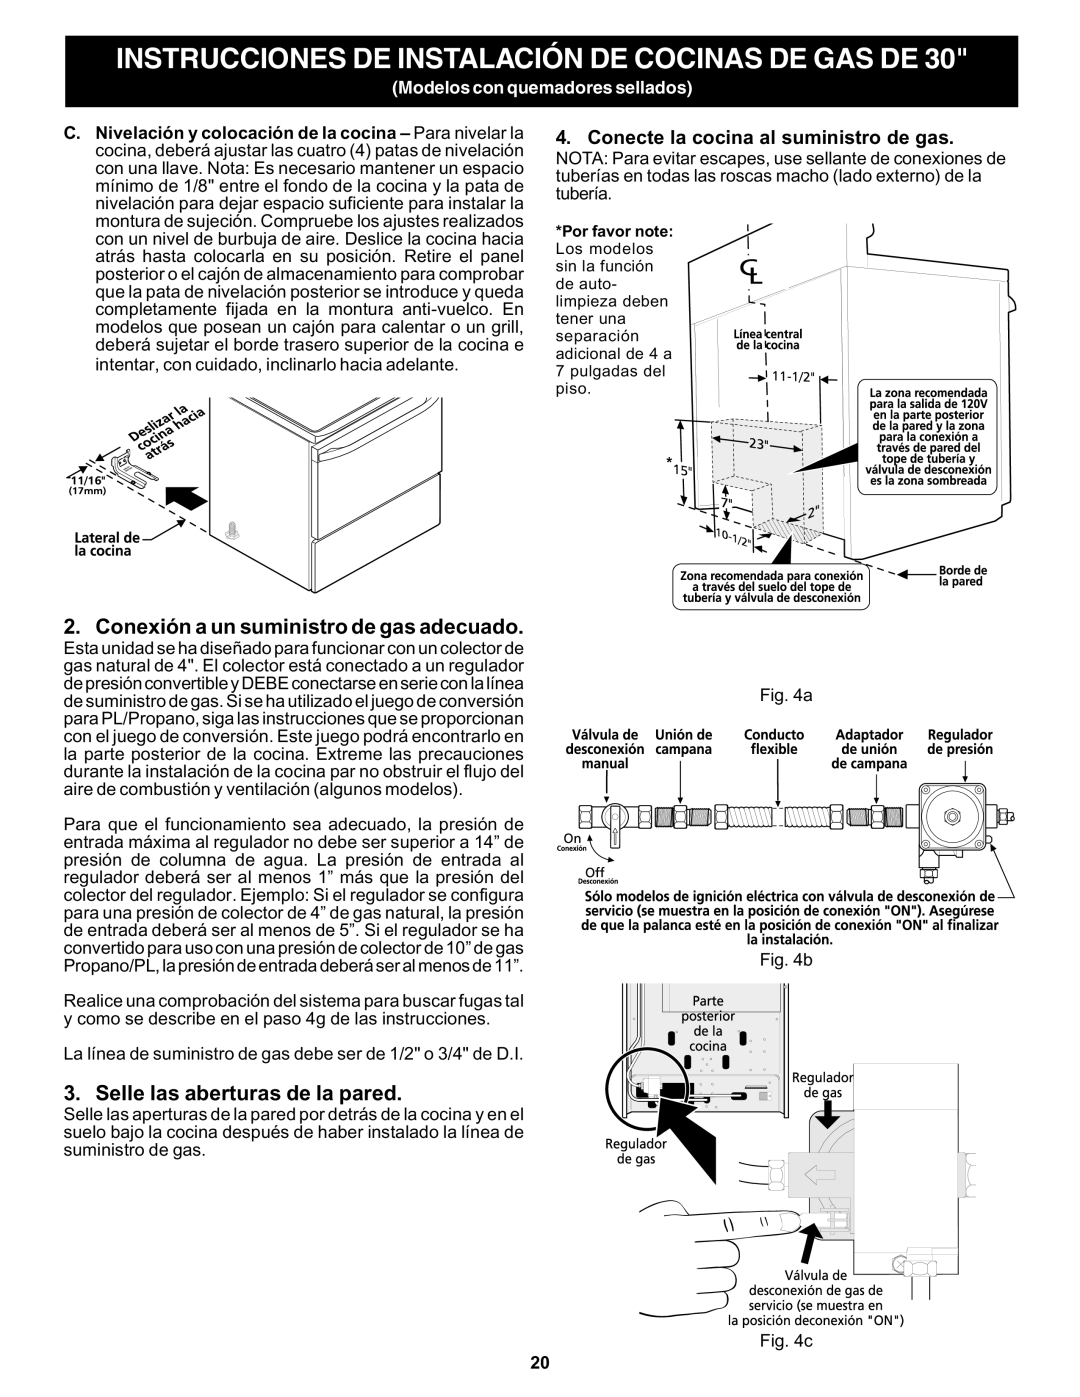 Bosch Appliances HGS5053UC manual Conexión a un suministro de gas adecuado, Selle las aberturas de la pared 